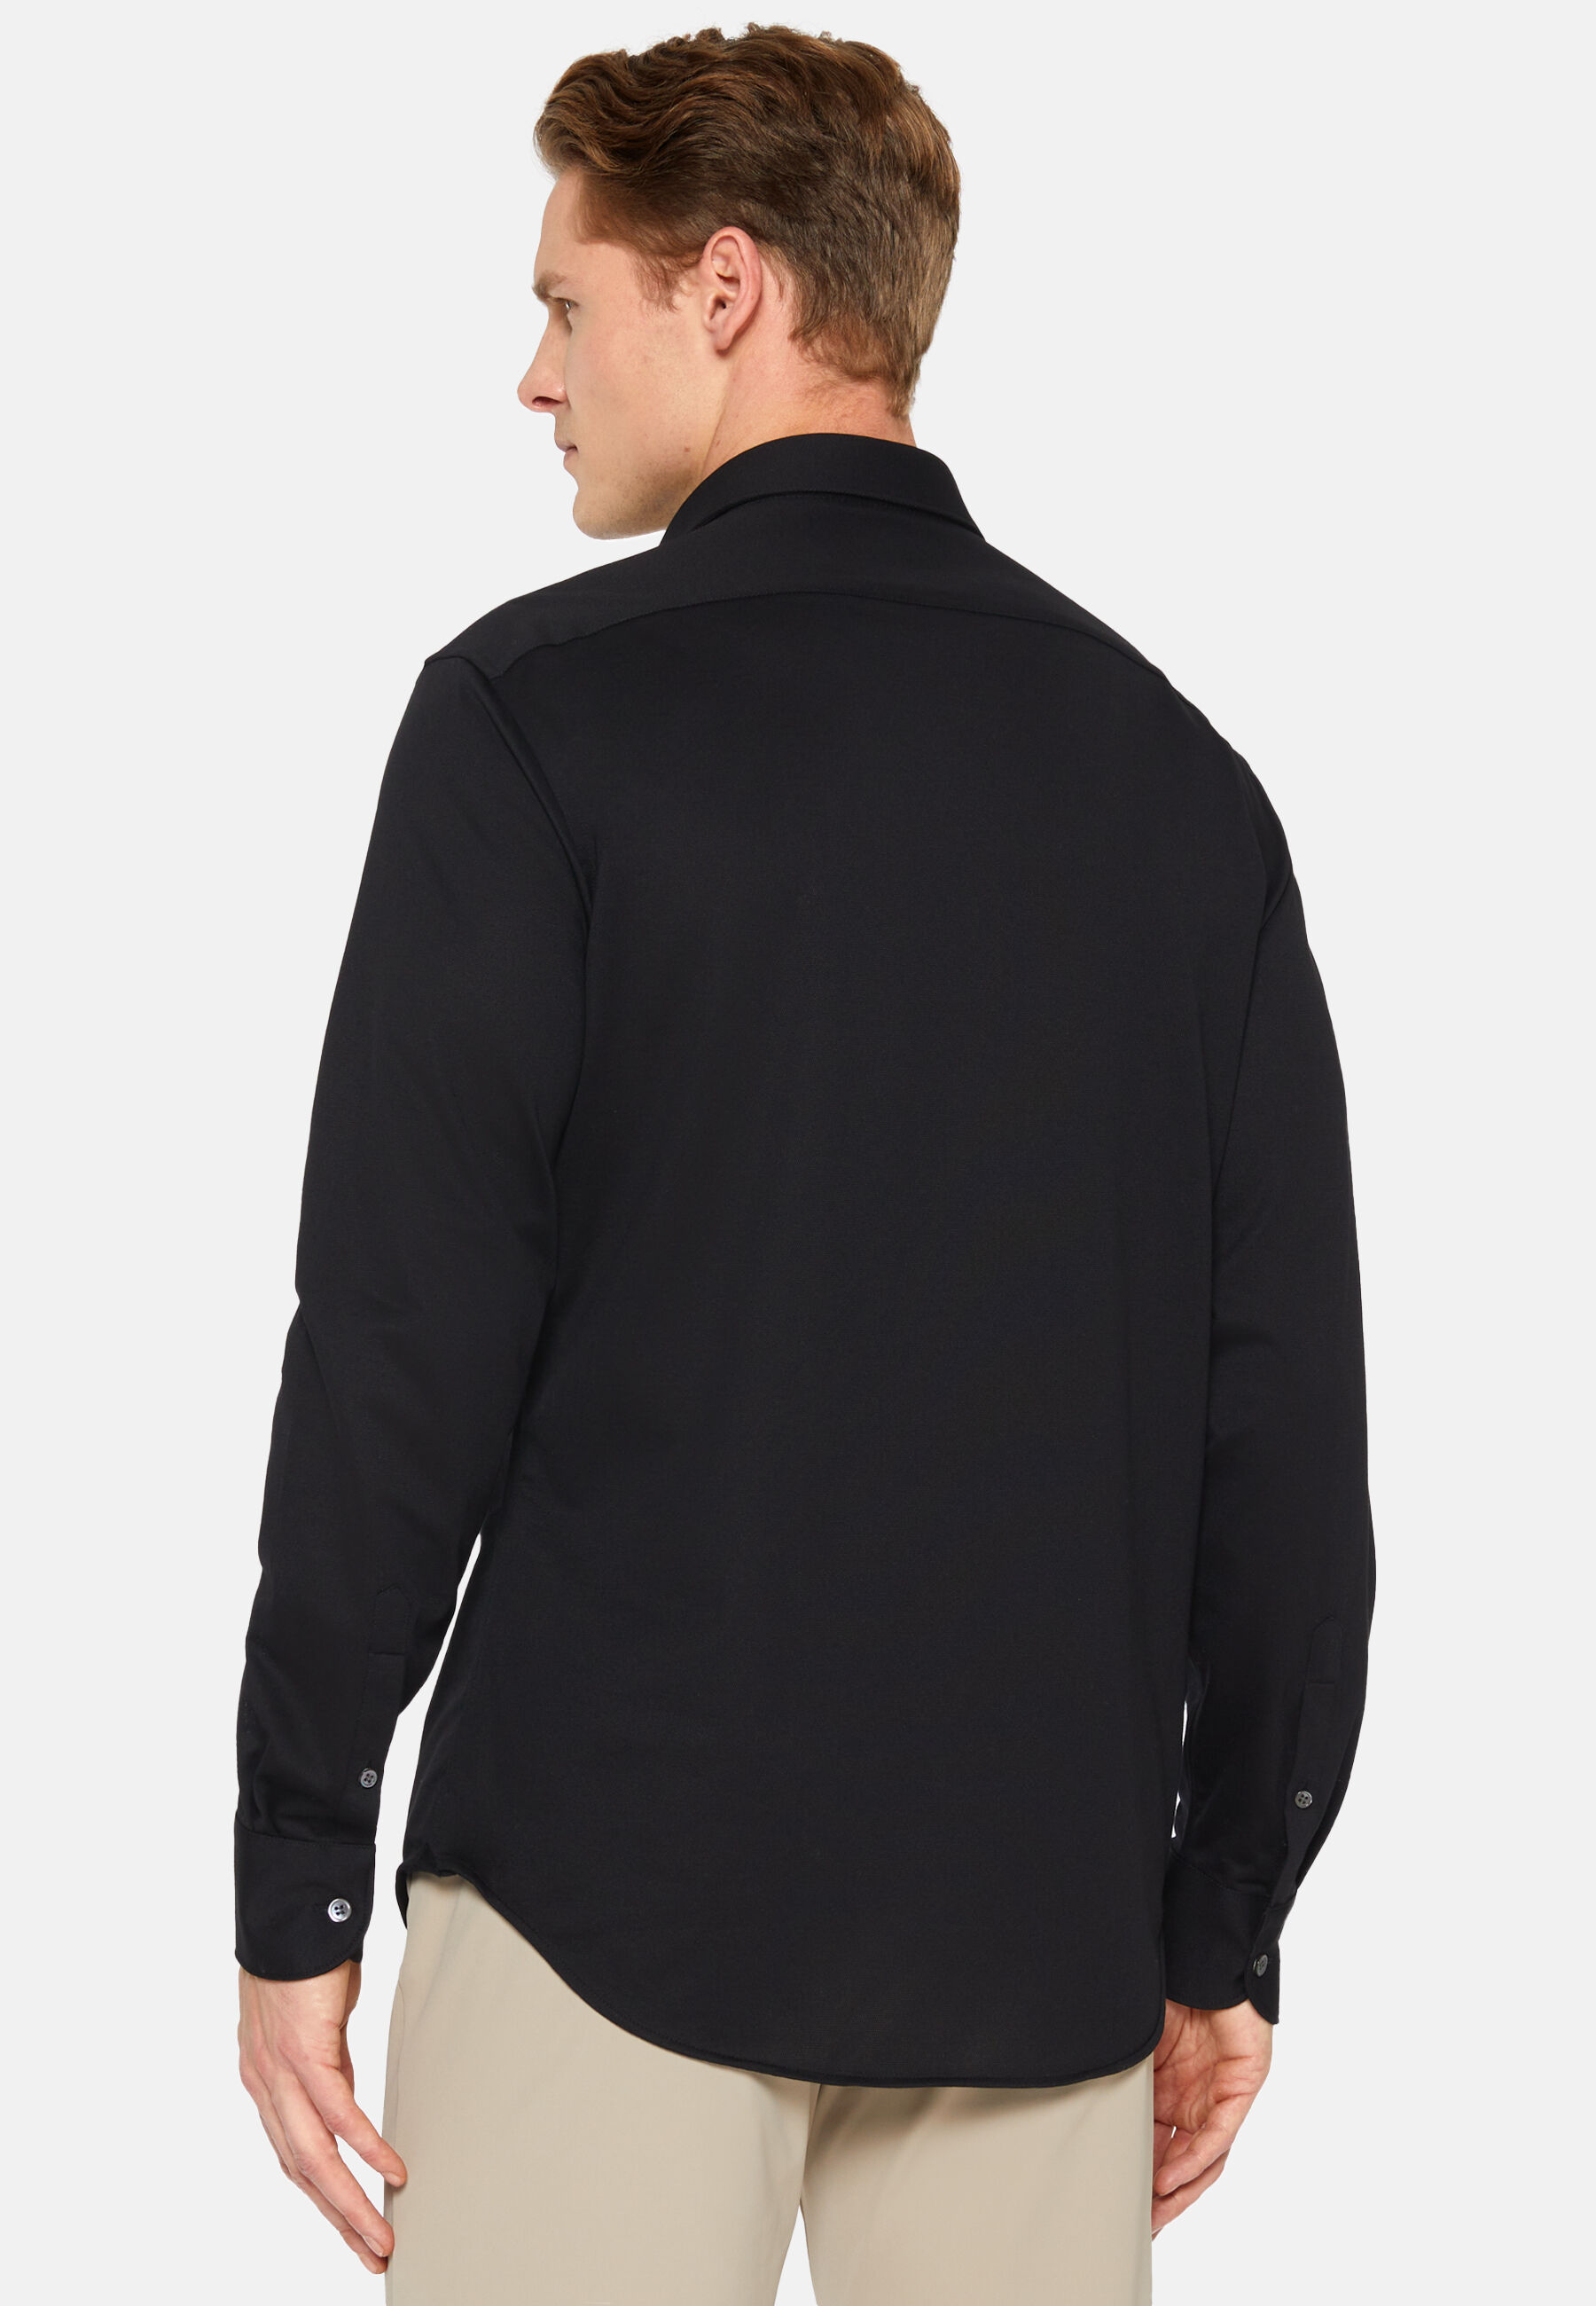 Slim Fit Black Shirt in Cotton and COOLMAX®, Black, hi-res